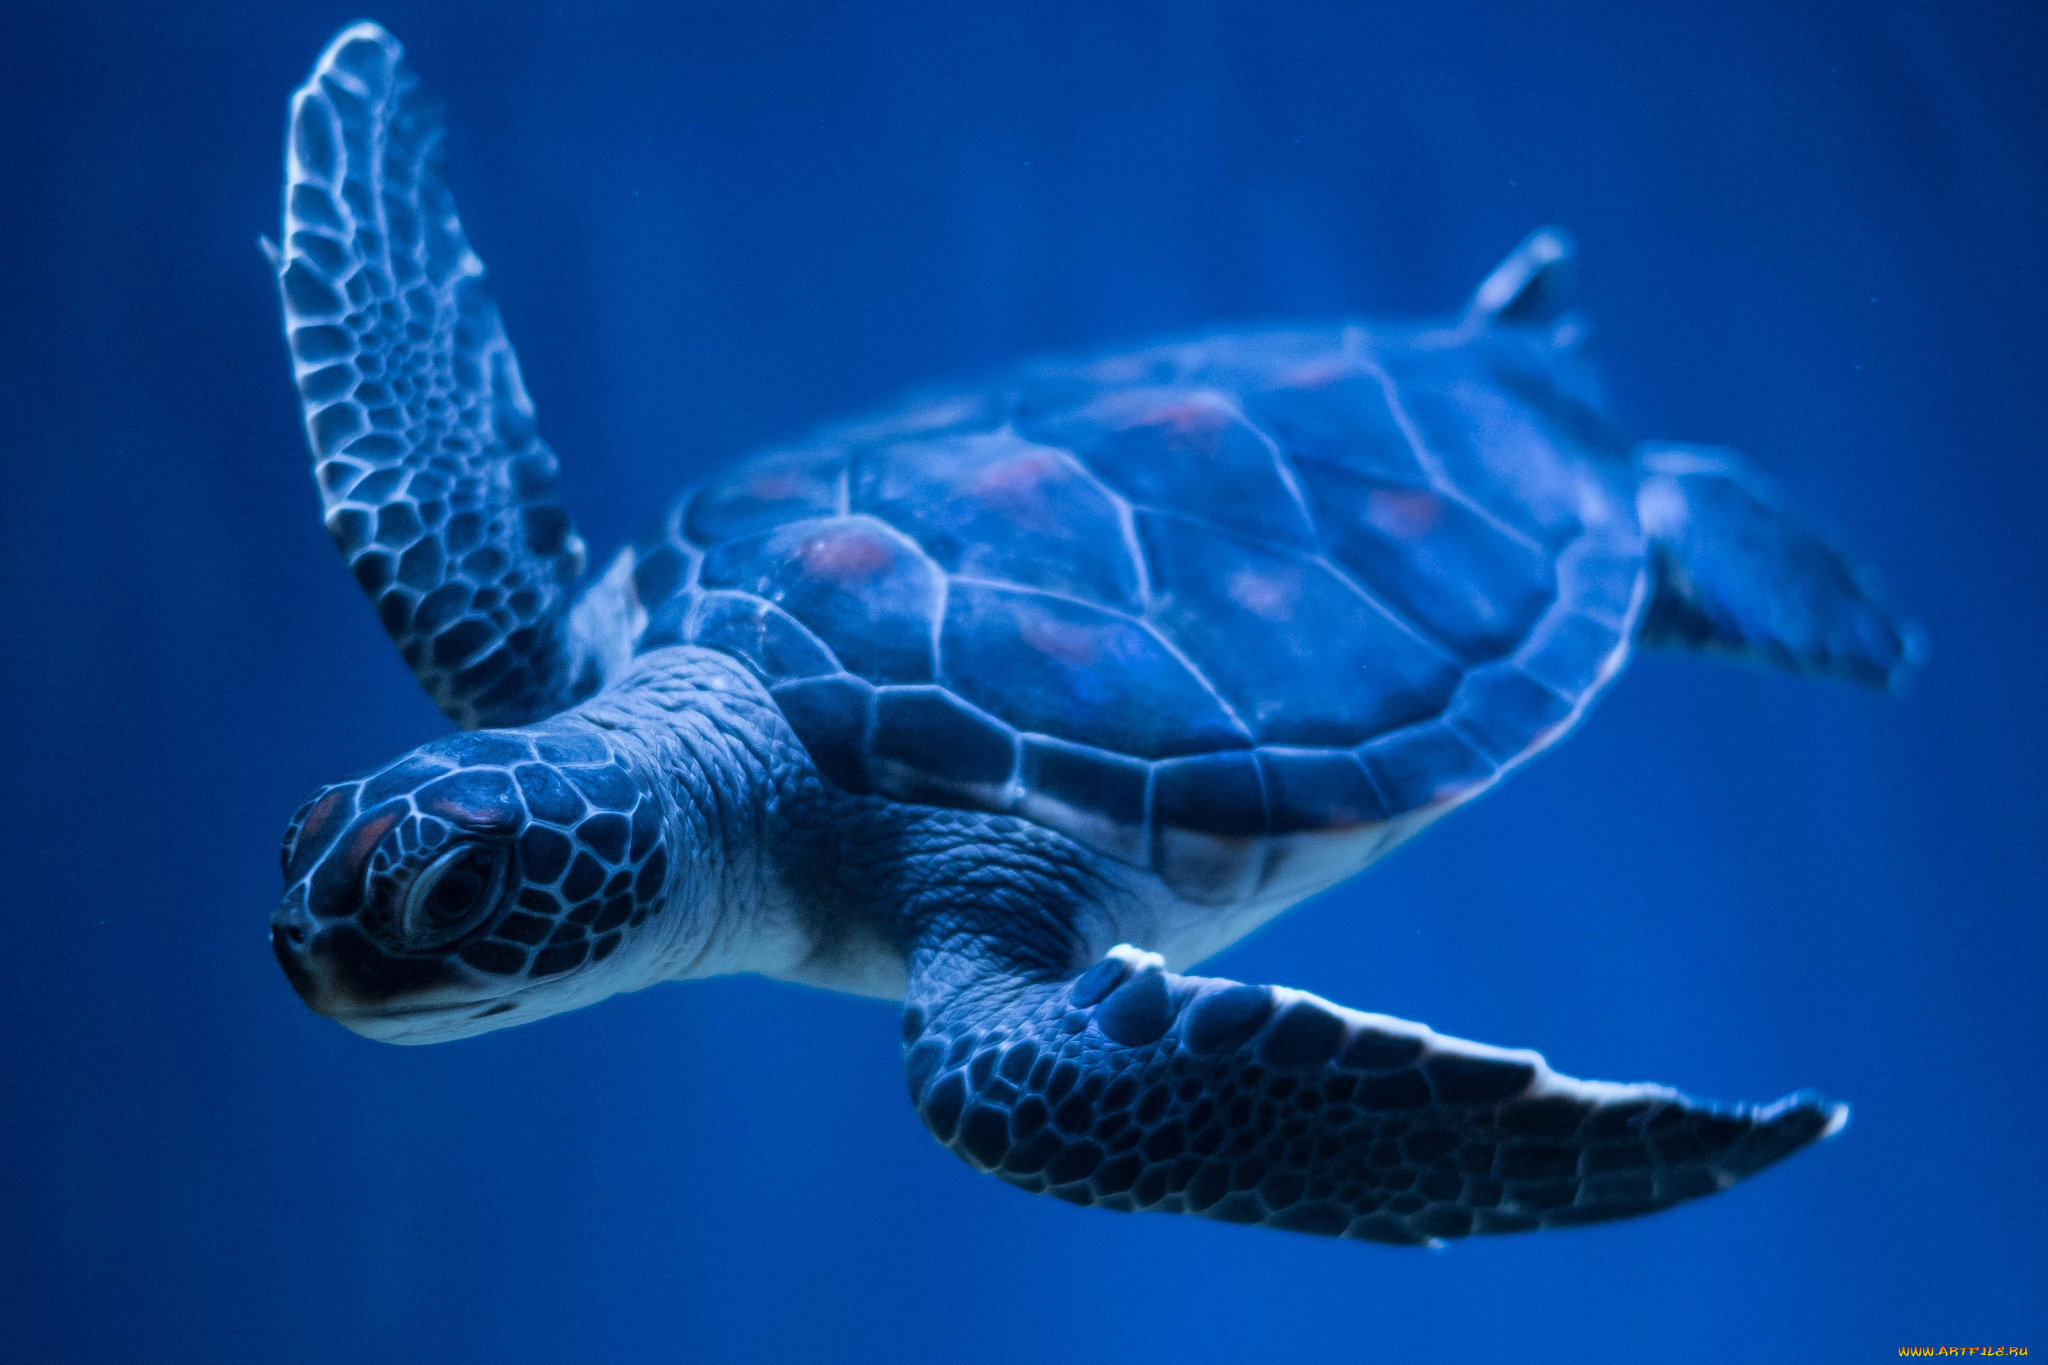 Turtle черепаха. Морская черепаха бисса. Панцирь морской черепахи. Черепаха бисса (Каретта). Черепаха бисса панцирь.